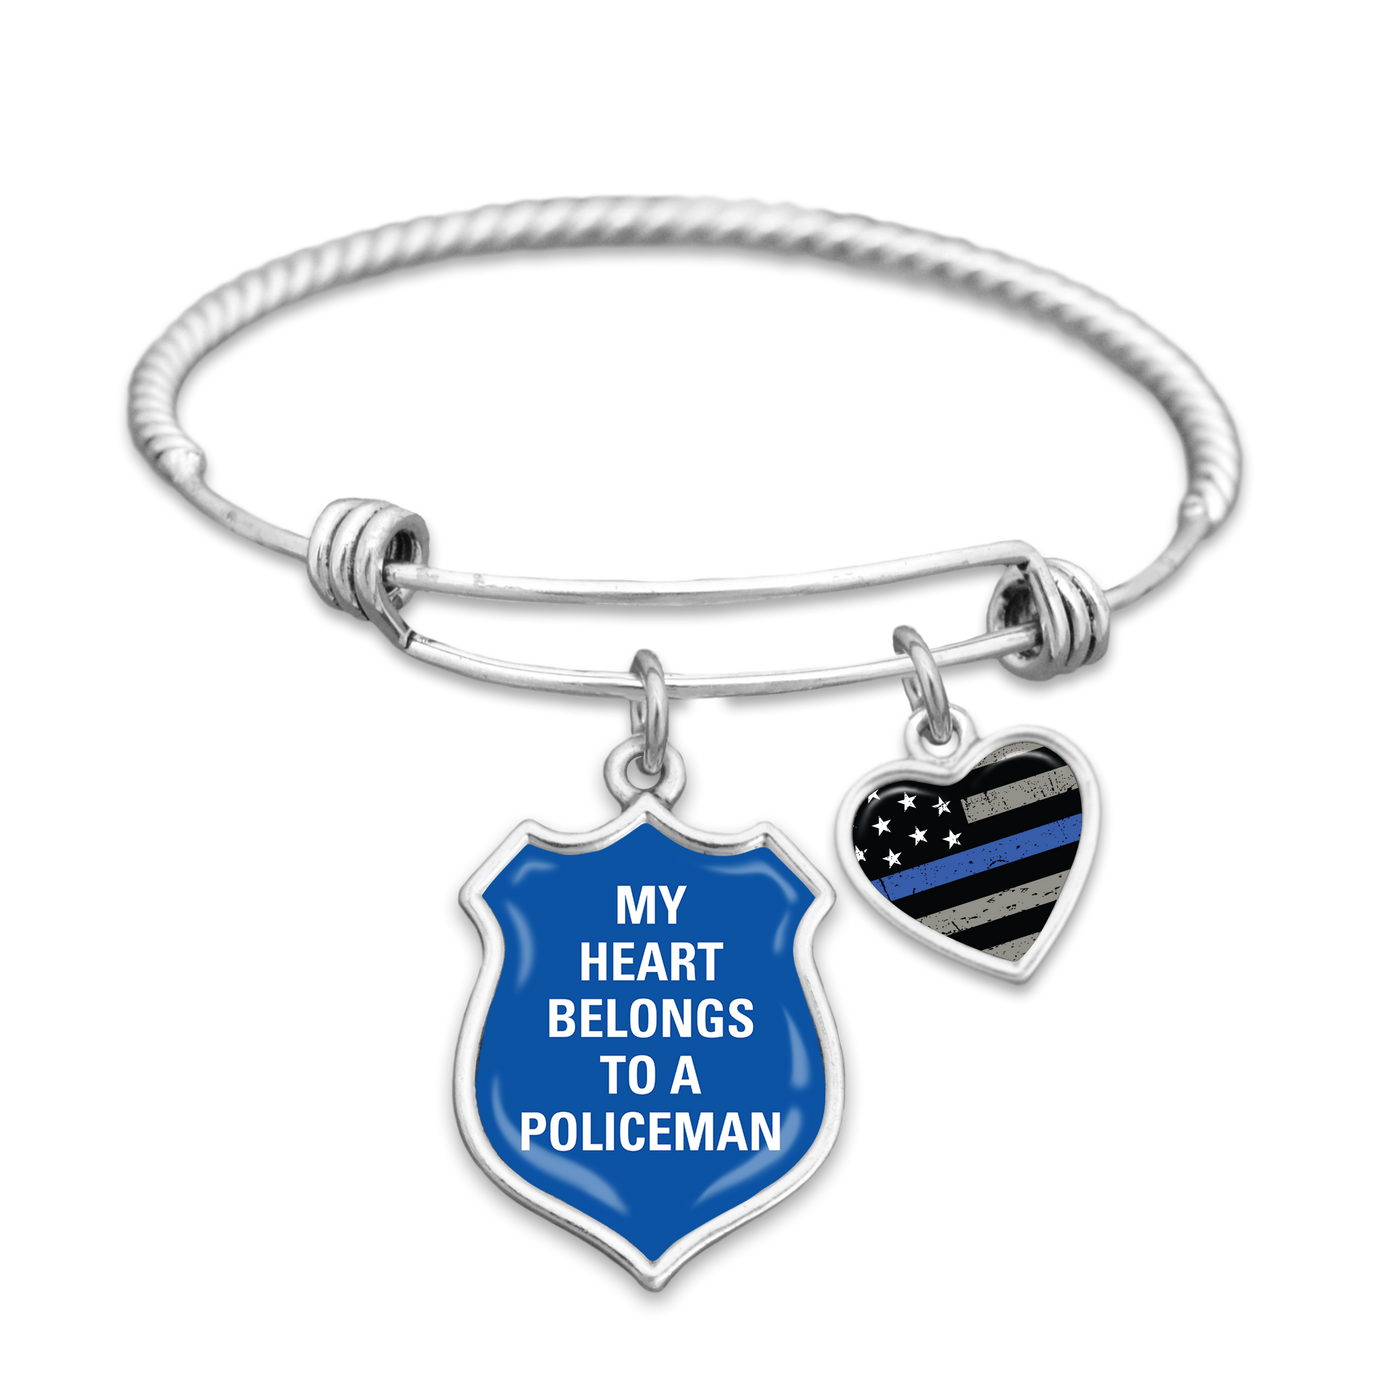 My Heart Belongs To A Policeman Charm Bracelet